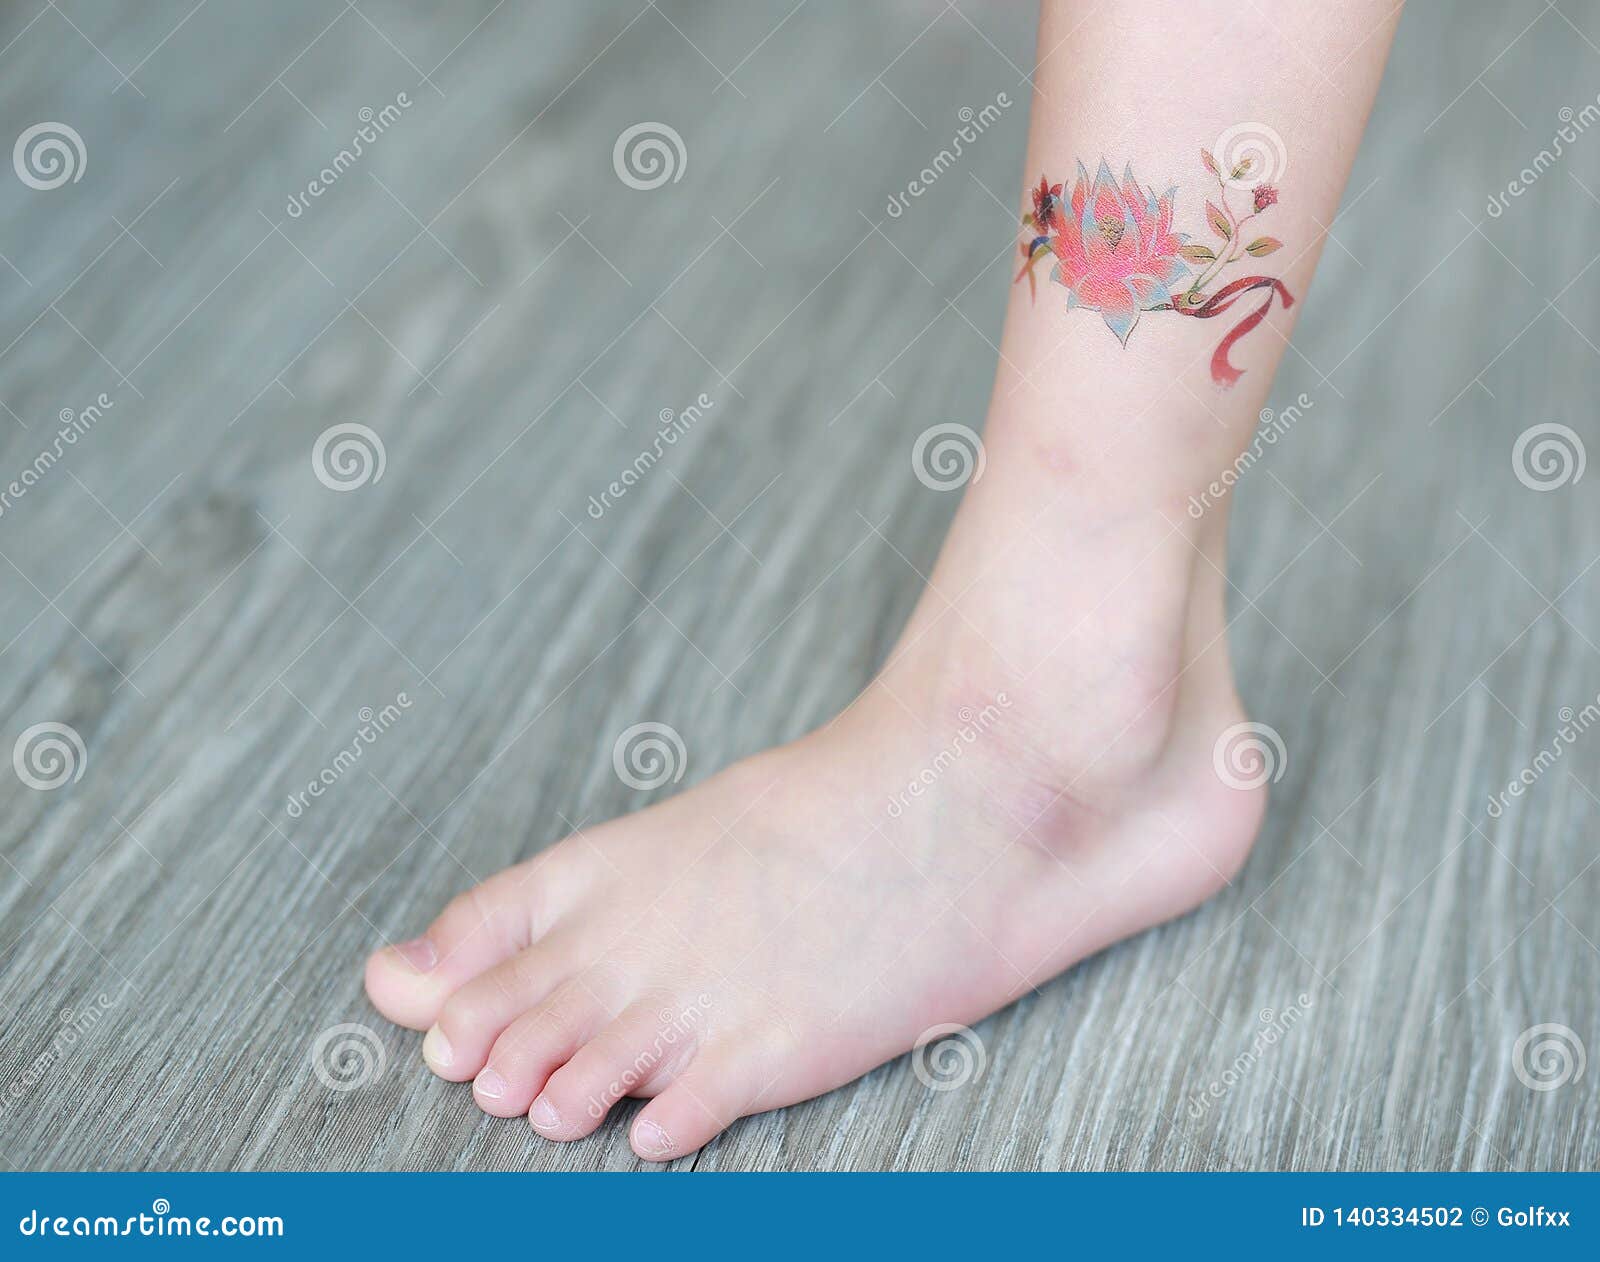 11 Ankle Tattoos Ideas to Try This Spring | Dainty tattoos ... | Foot  tattoos, Minimalist tattoo, Full sleeve tattoos